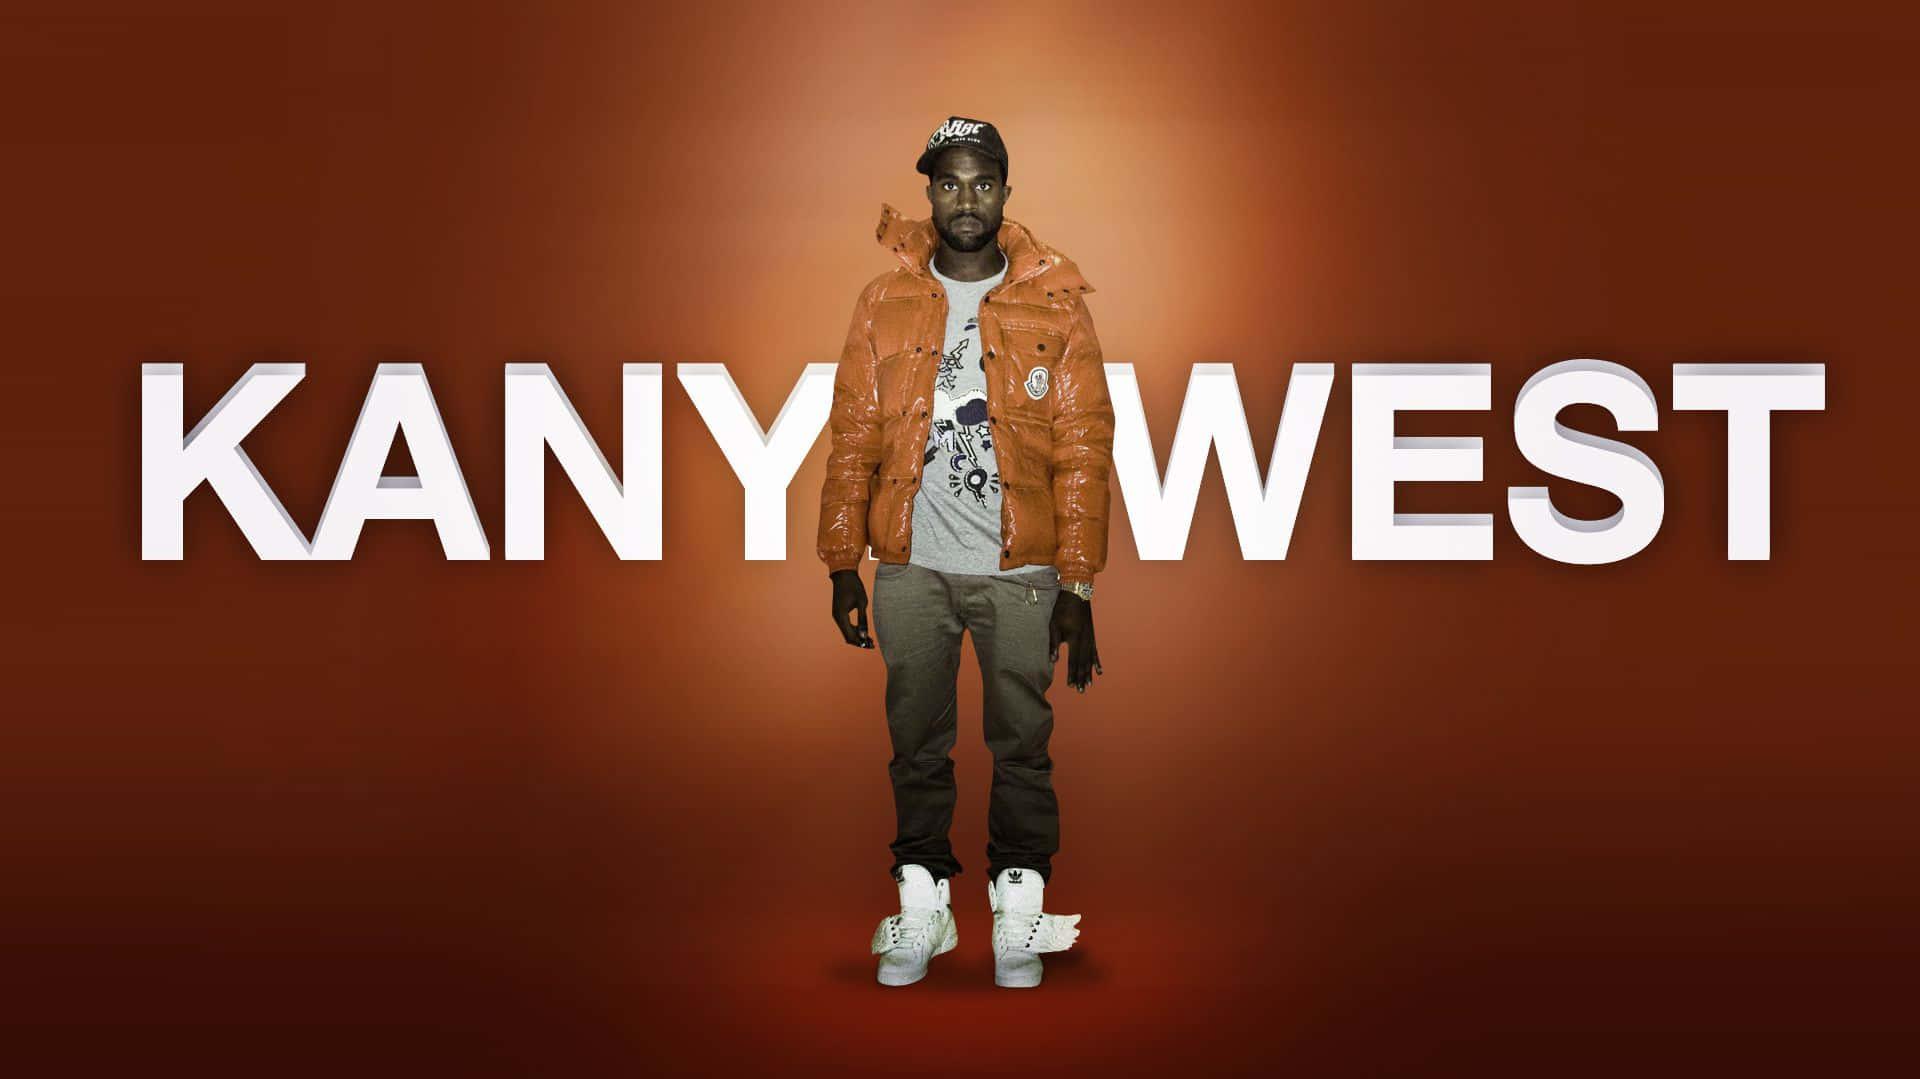  Kanye West Backgrounds